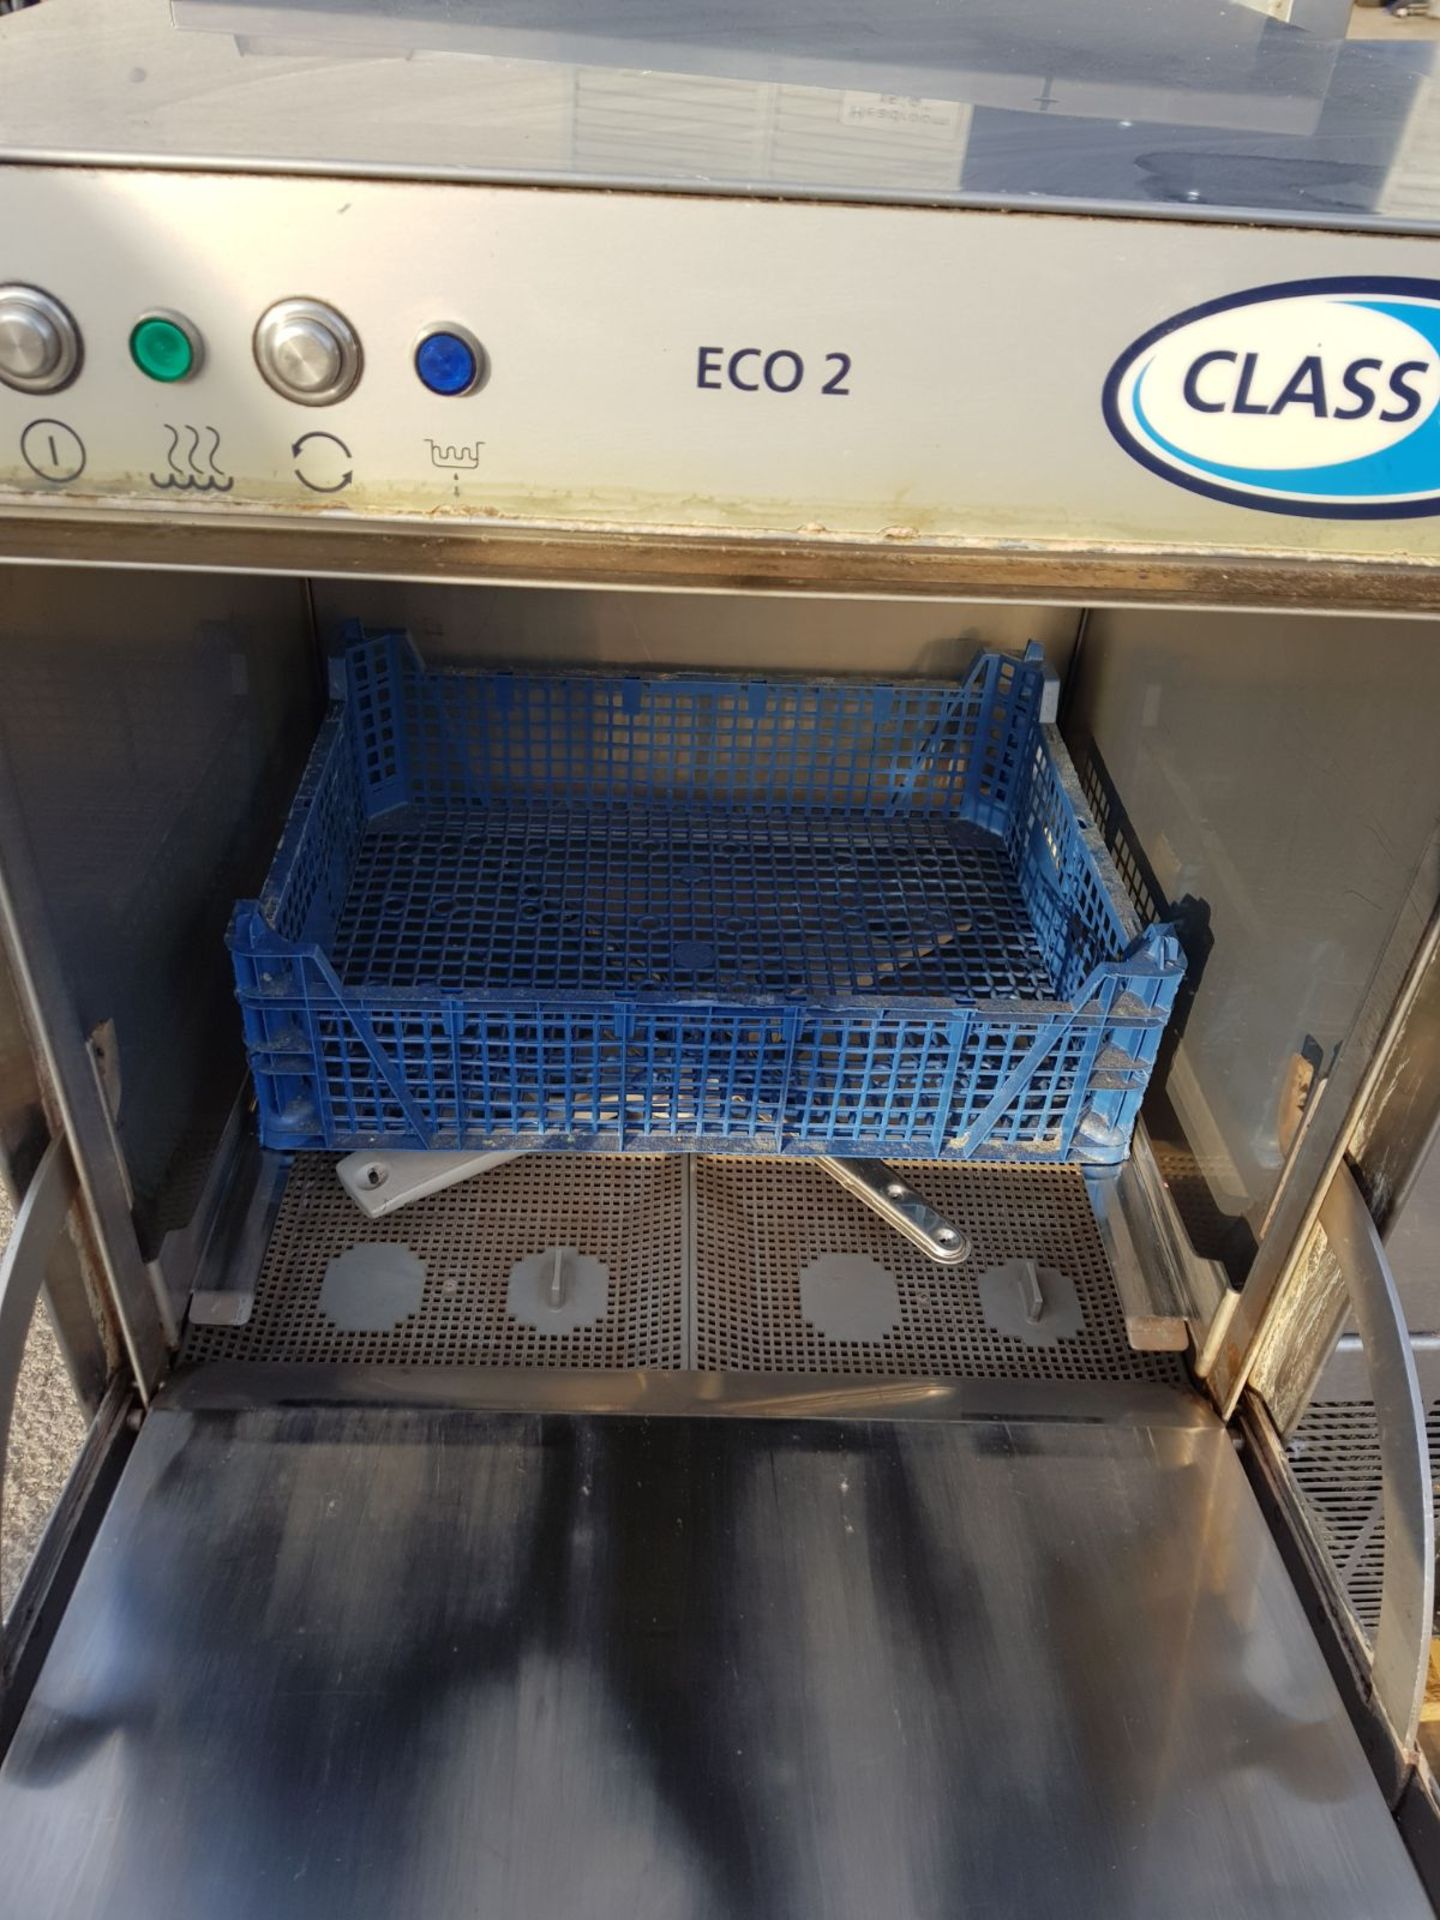 CLASS EQ ECO 2 DISHWASHER *NO VAT* - Image 2 of 2